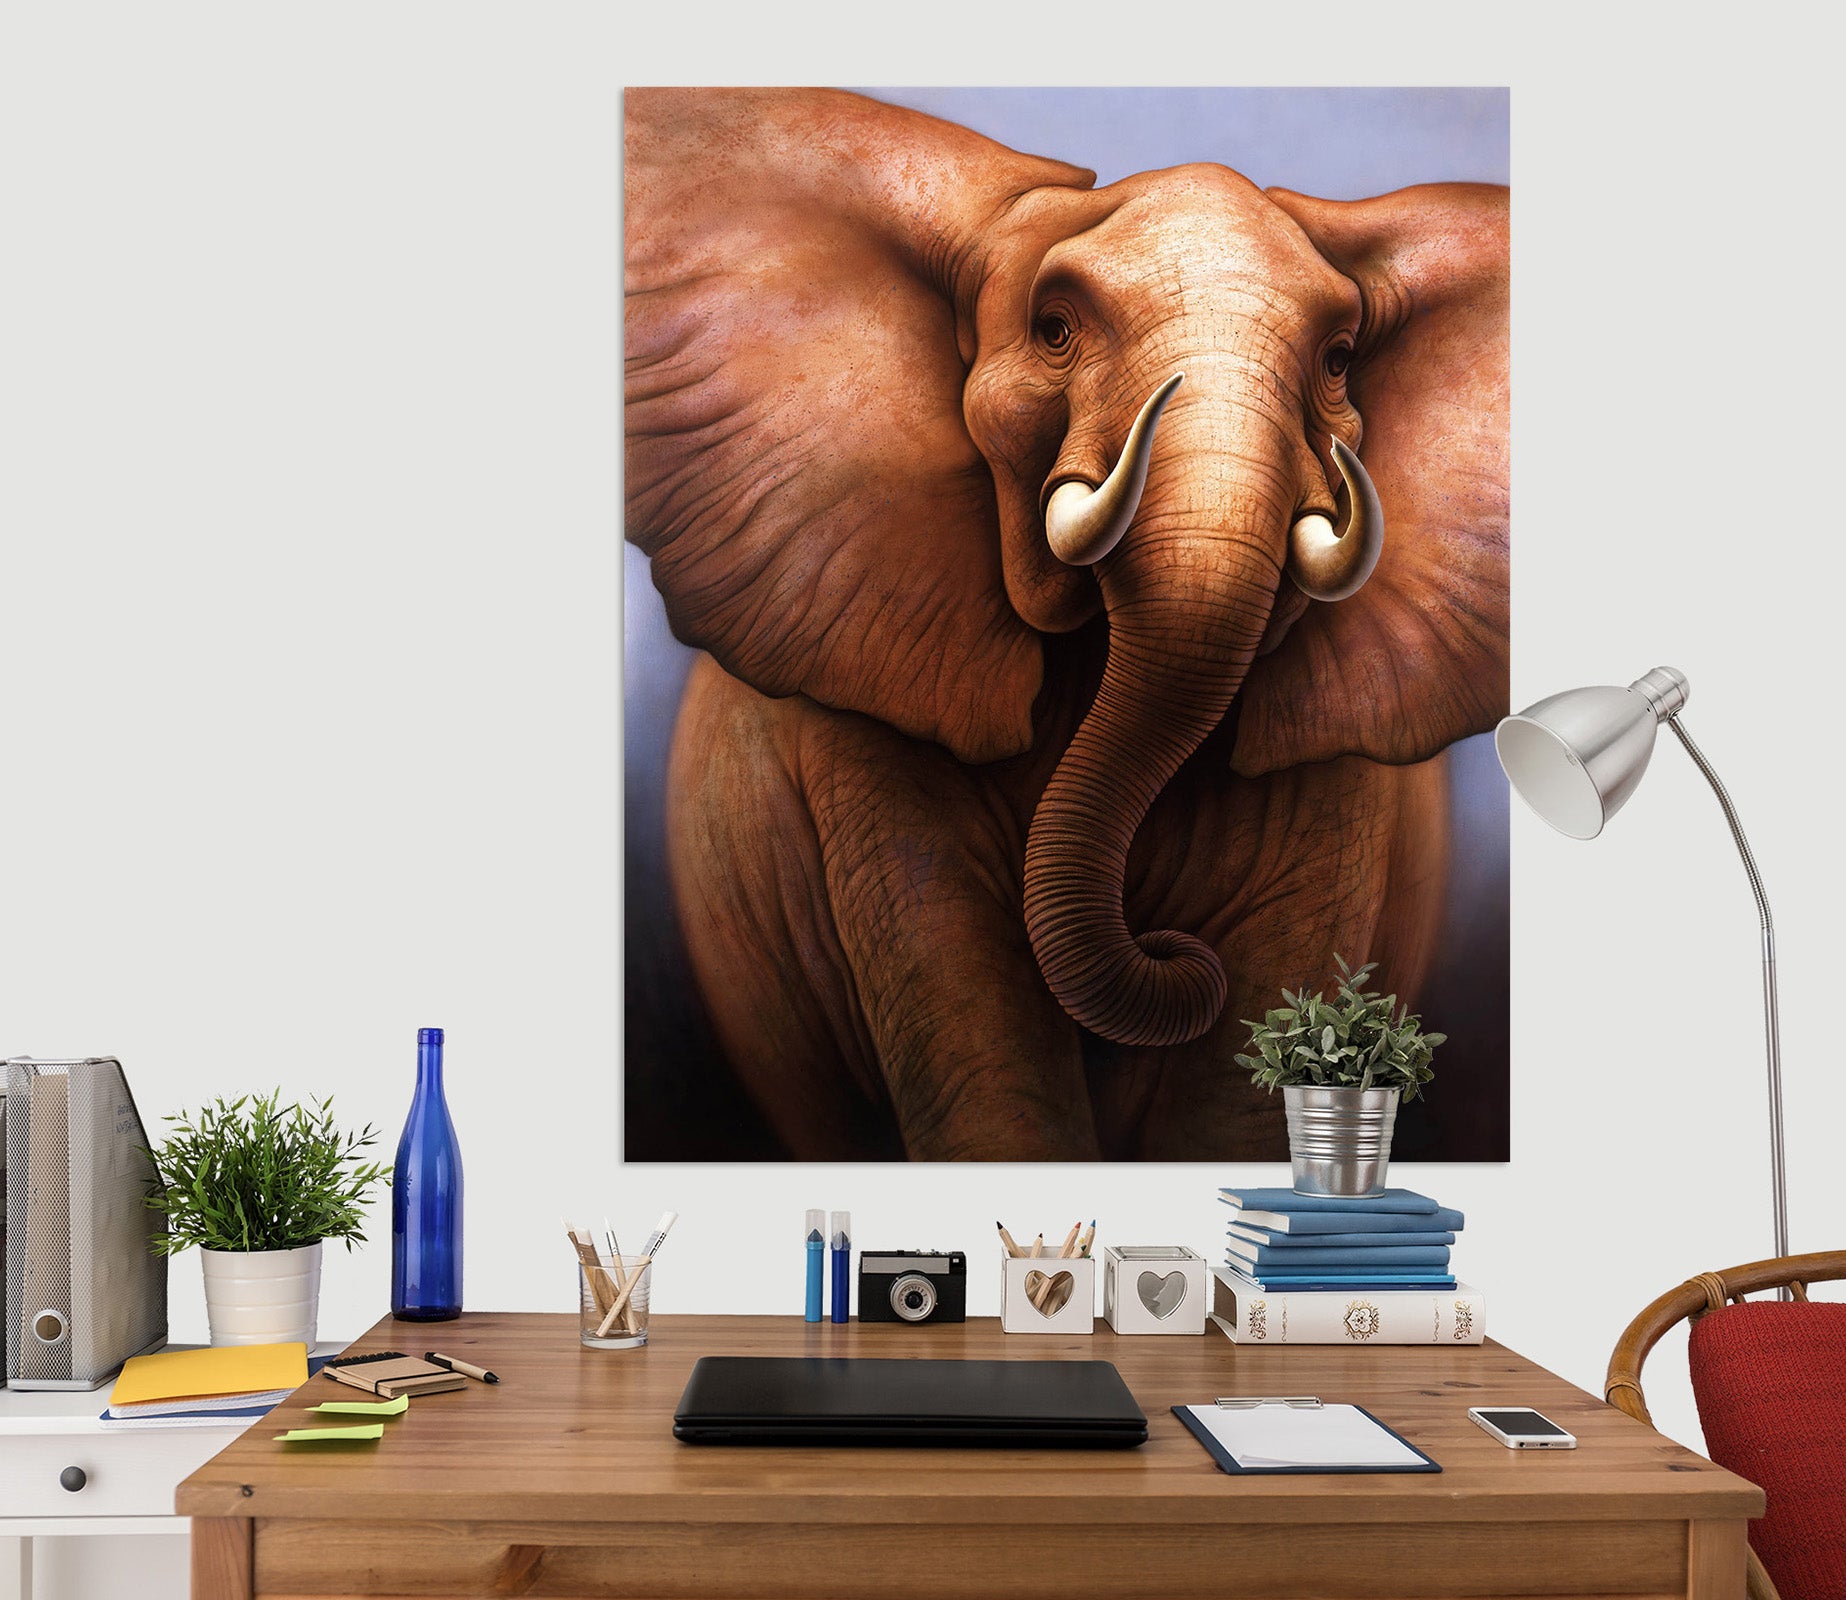 3D Elephant 033 Jerry LoFaro Wall Sticker